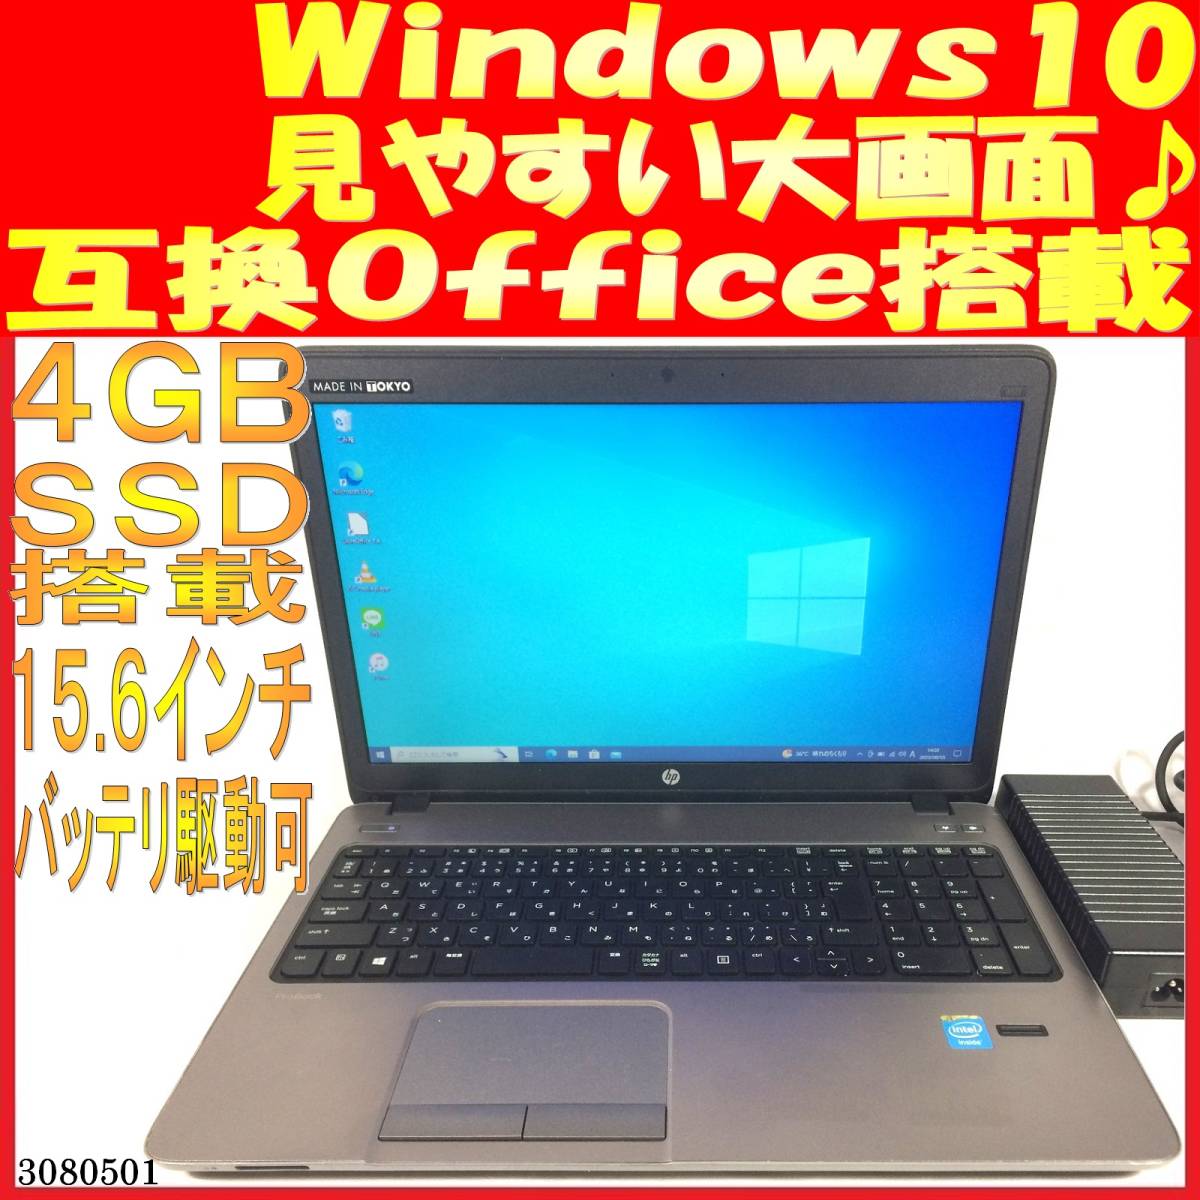 ProBook 450 G1 第四世代Celeron 2950M 4GB 128GB(3080501中古ノートパソコン Windows10 互換Office 大画面 テンキー